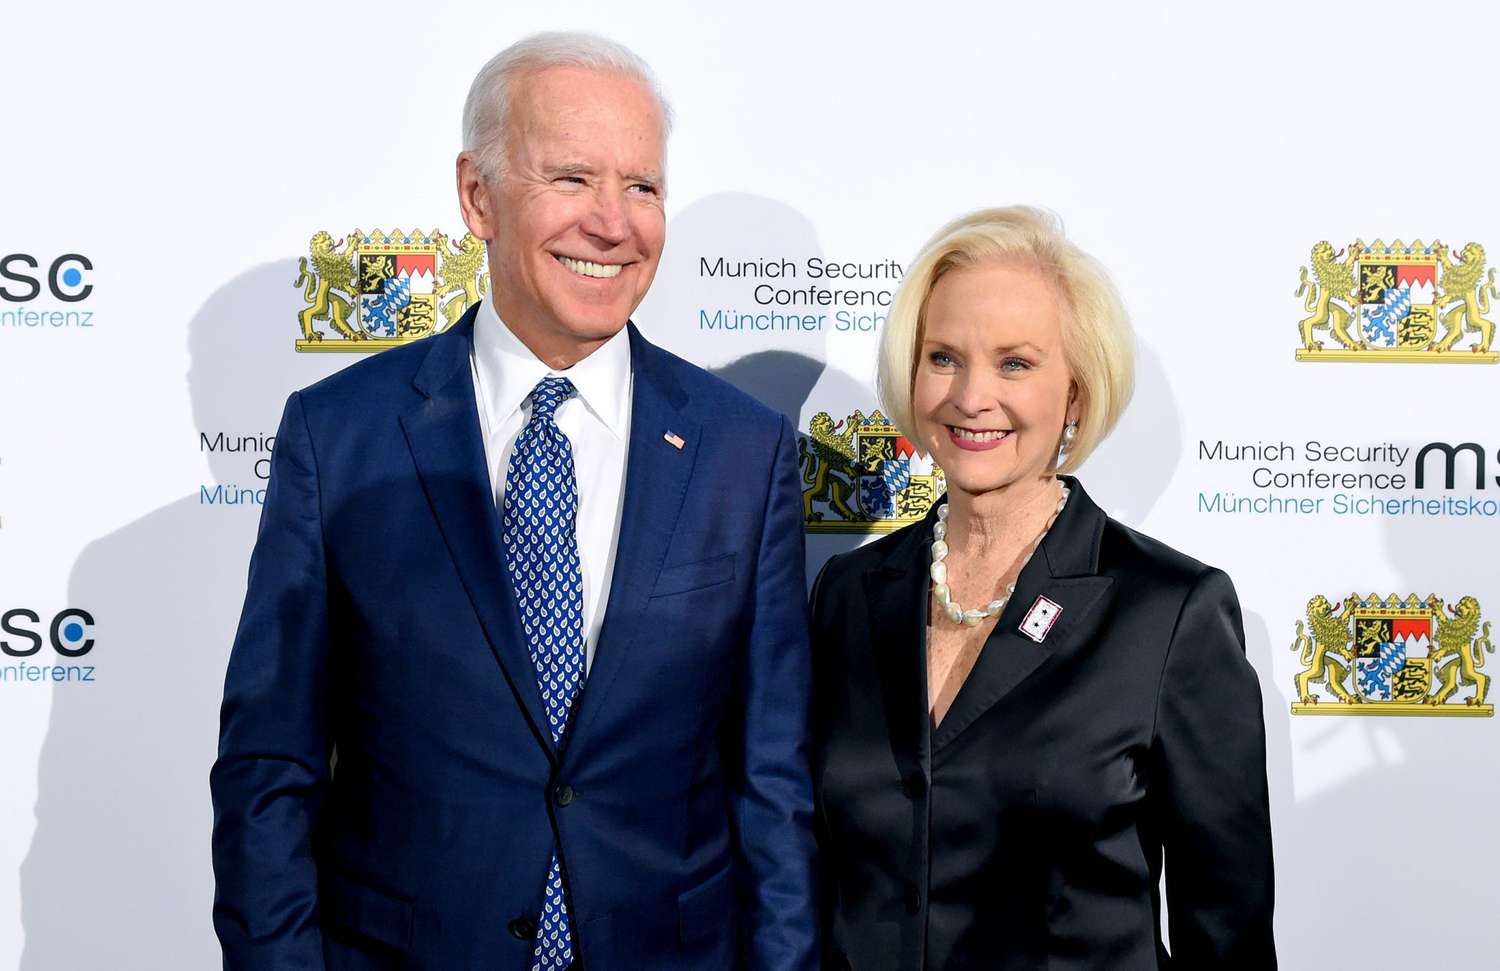 Cindy McCain Supports Joe Biden in DNC Appearance | PEOPLE.com